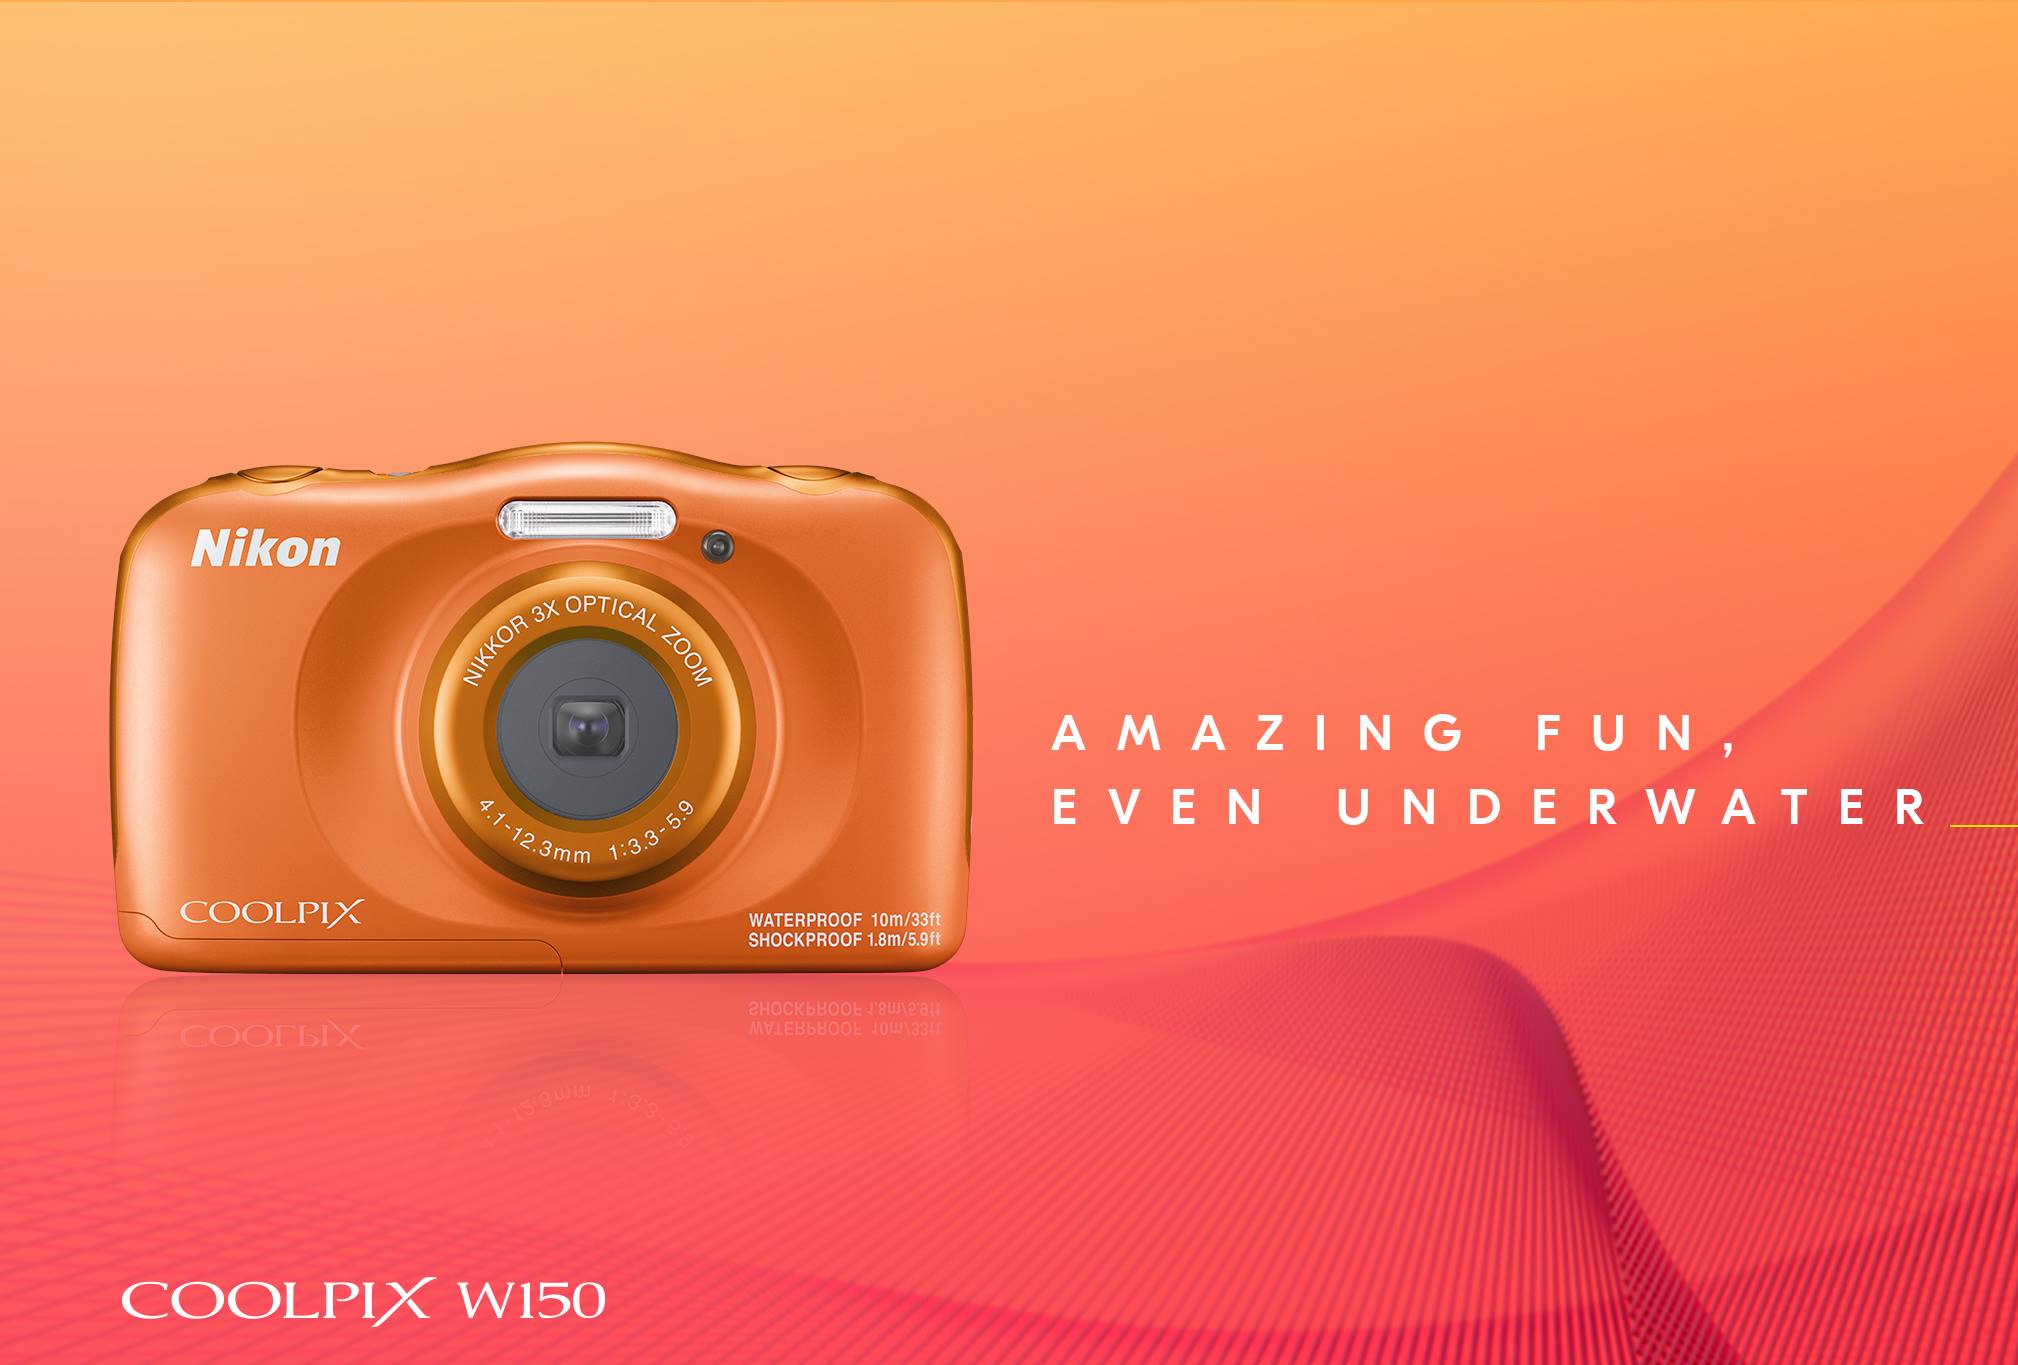 Make Capturing Beautiful Moments Enjoyable with Nikon COOLPIX W150